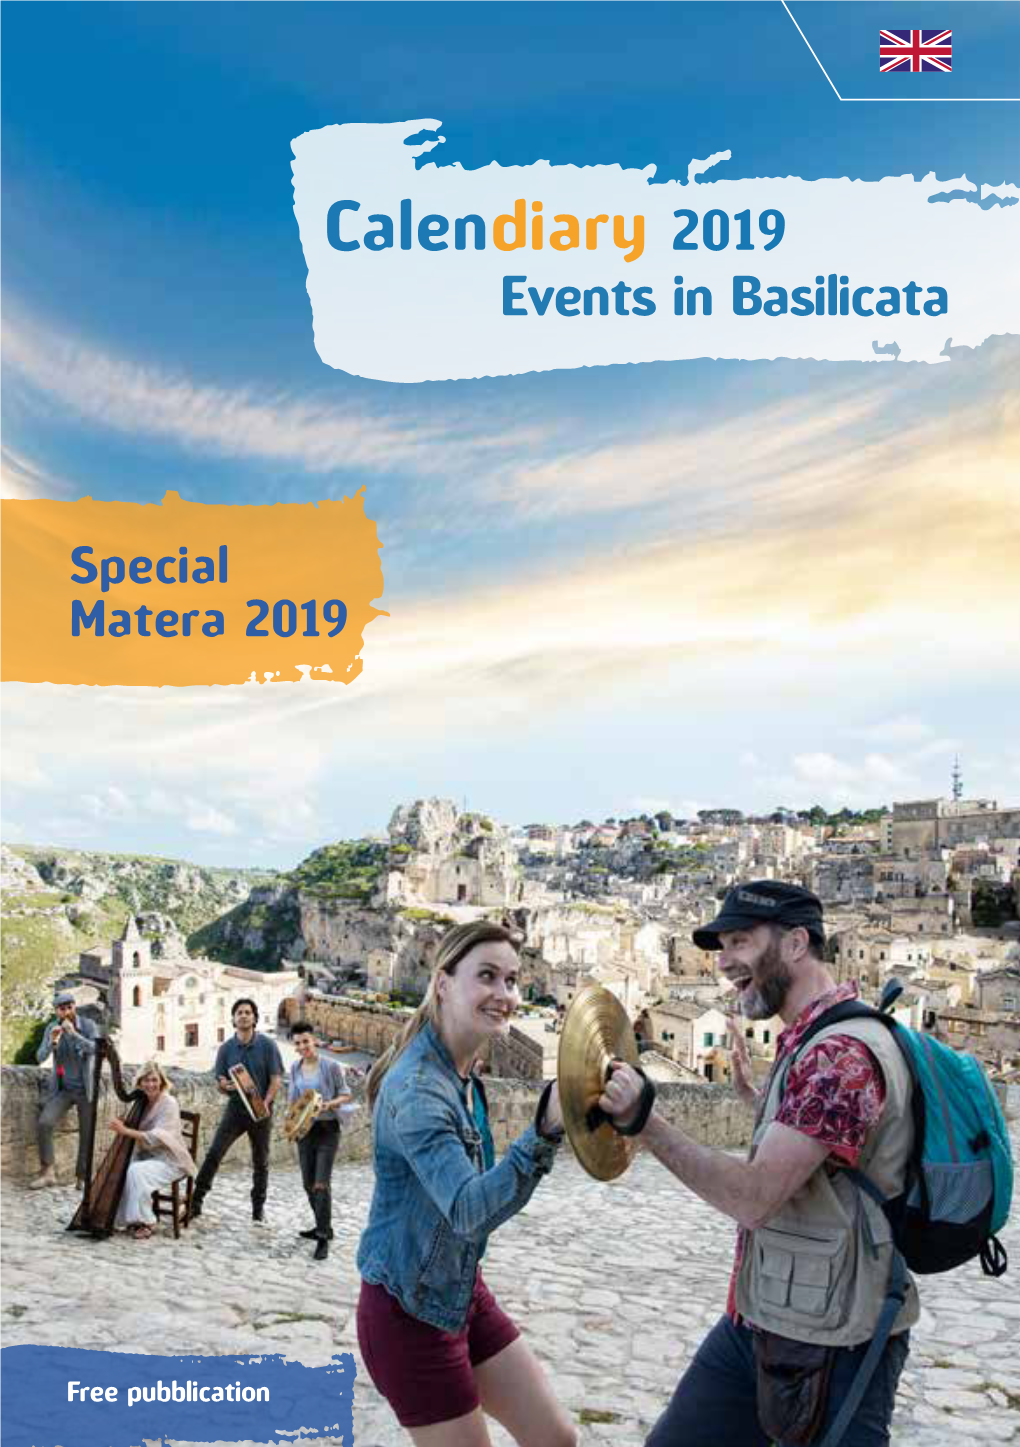 Calendiary 2019 Events in Basilicata